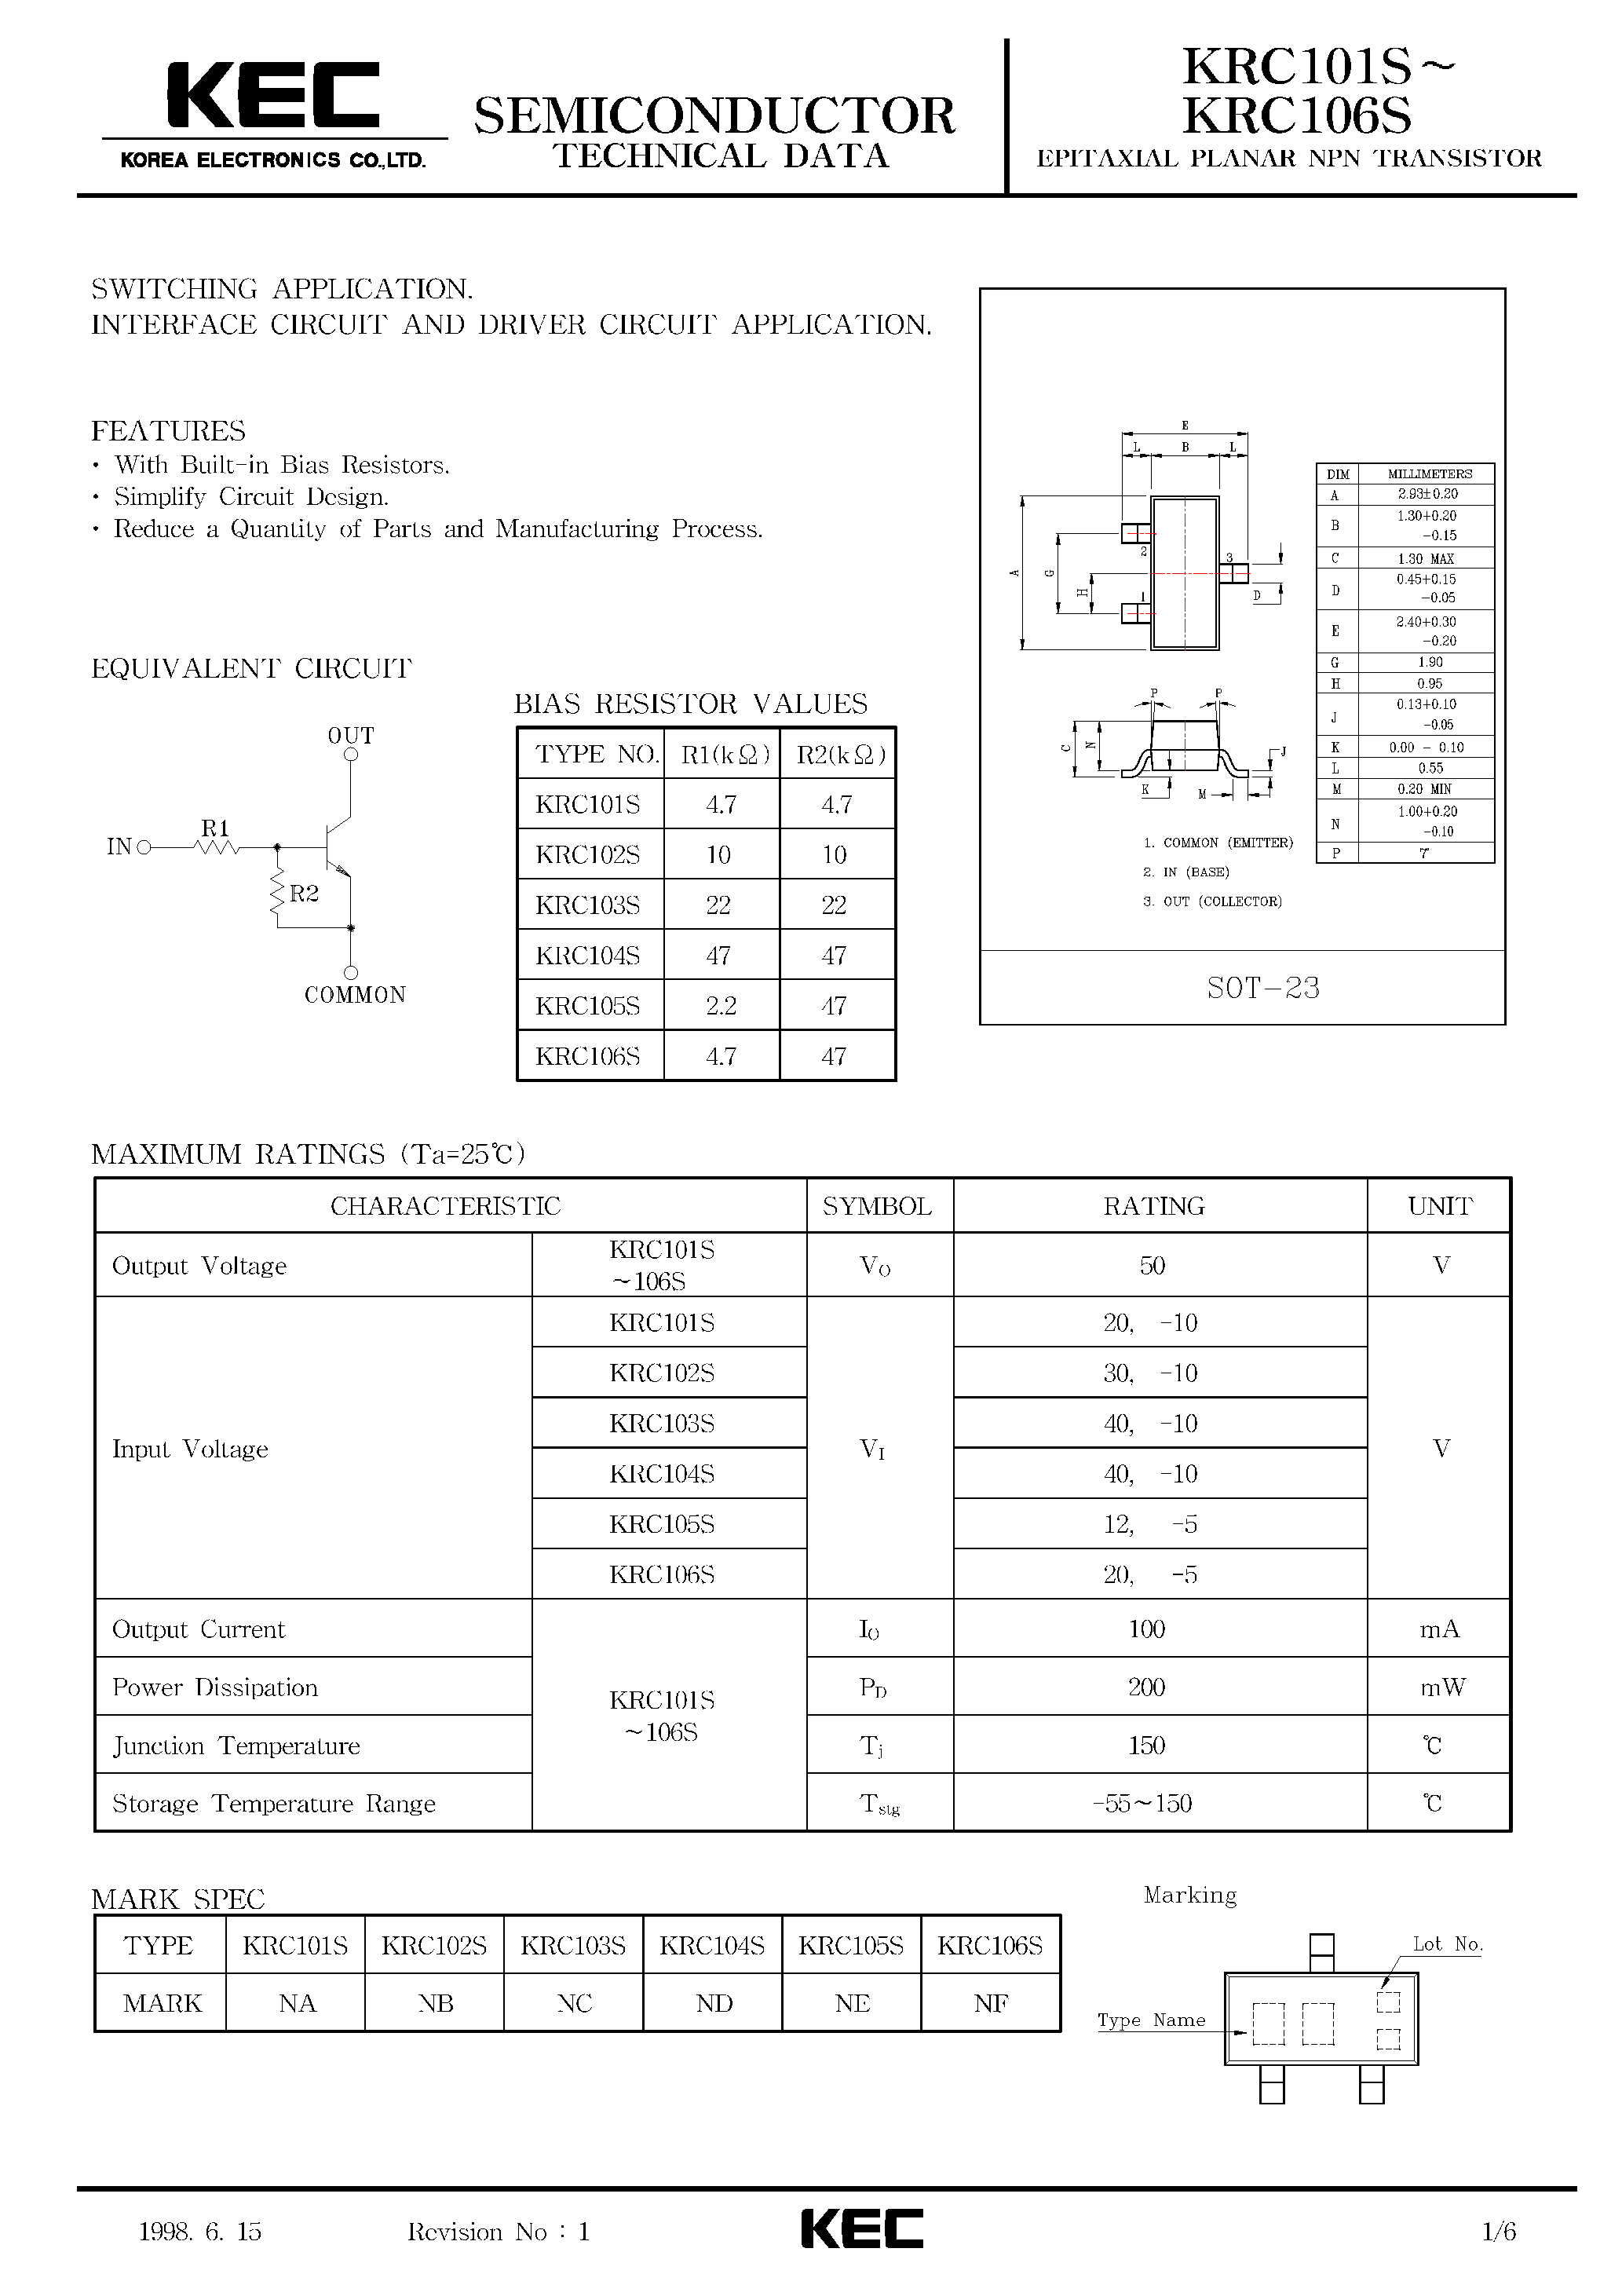 Datasheet KRC101S - (KRC101S - KRC106S) EPITAXIAL PLANAR PNP TRANSISTOR page 1